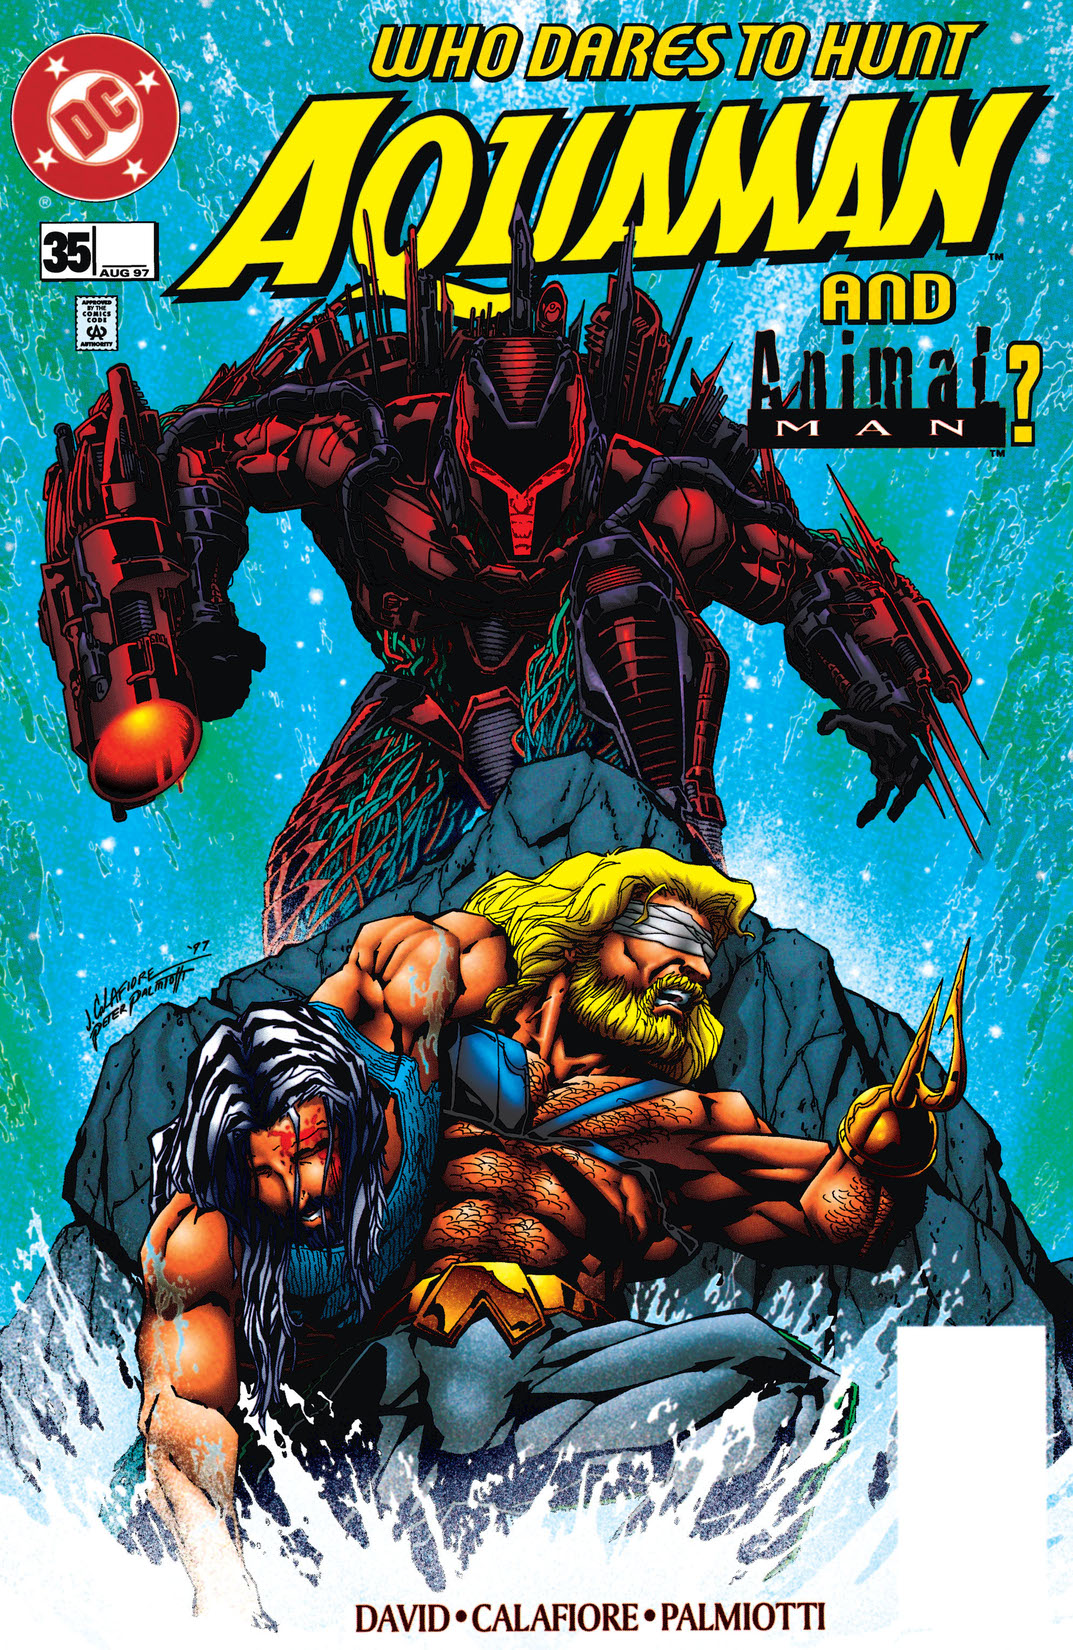 Aquaman (1994-) #35 preview images